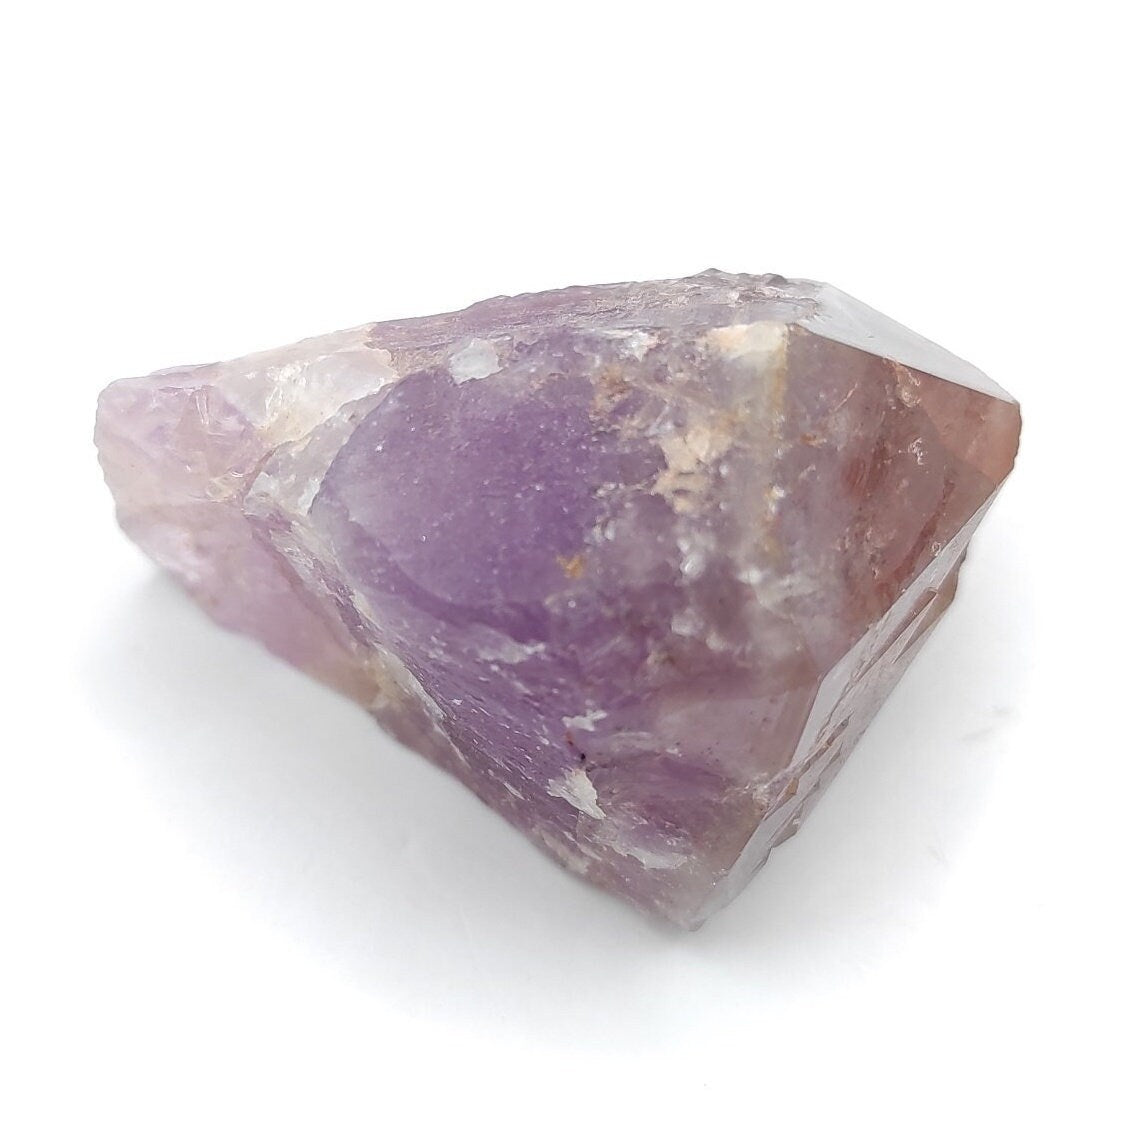 14g Mini Thunder Bay Amethyst - Hematite Amethyst - Canadian Amethyst Crystal - Hematite Included - Mini Small Pocket Crystals